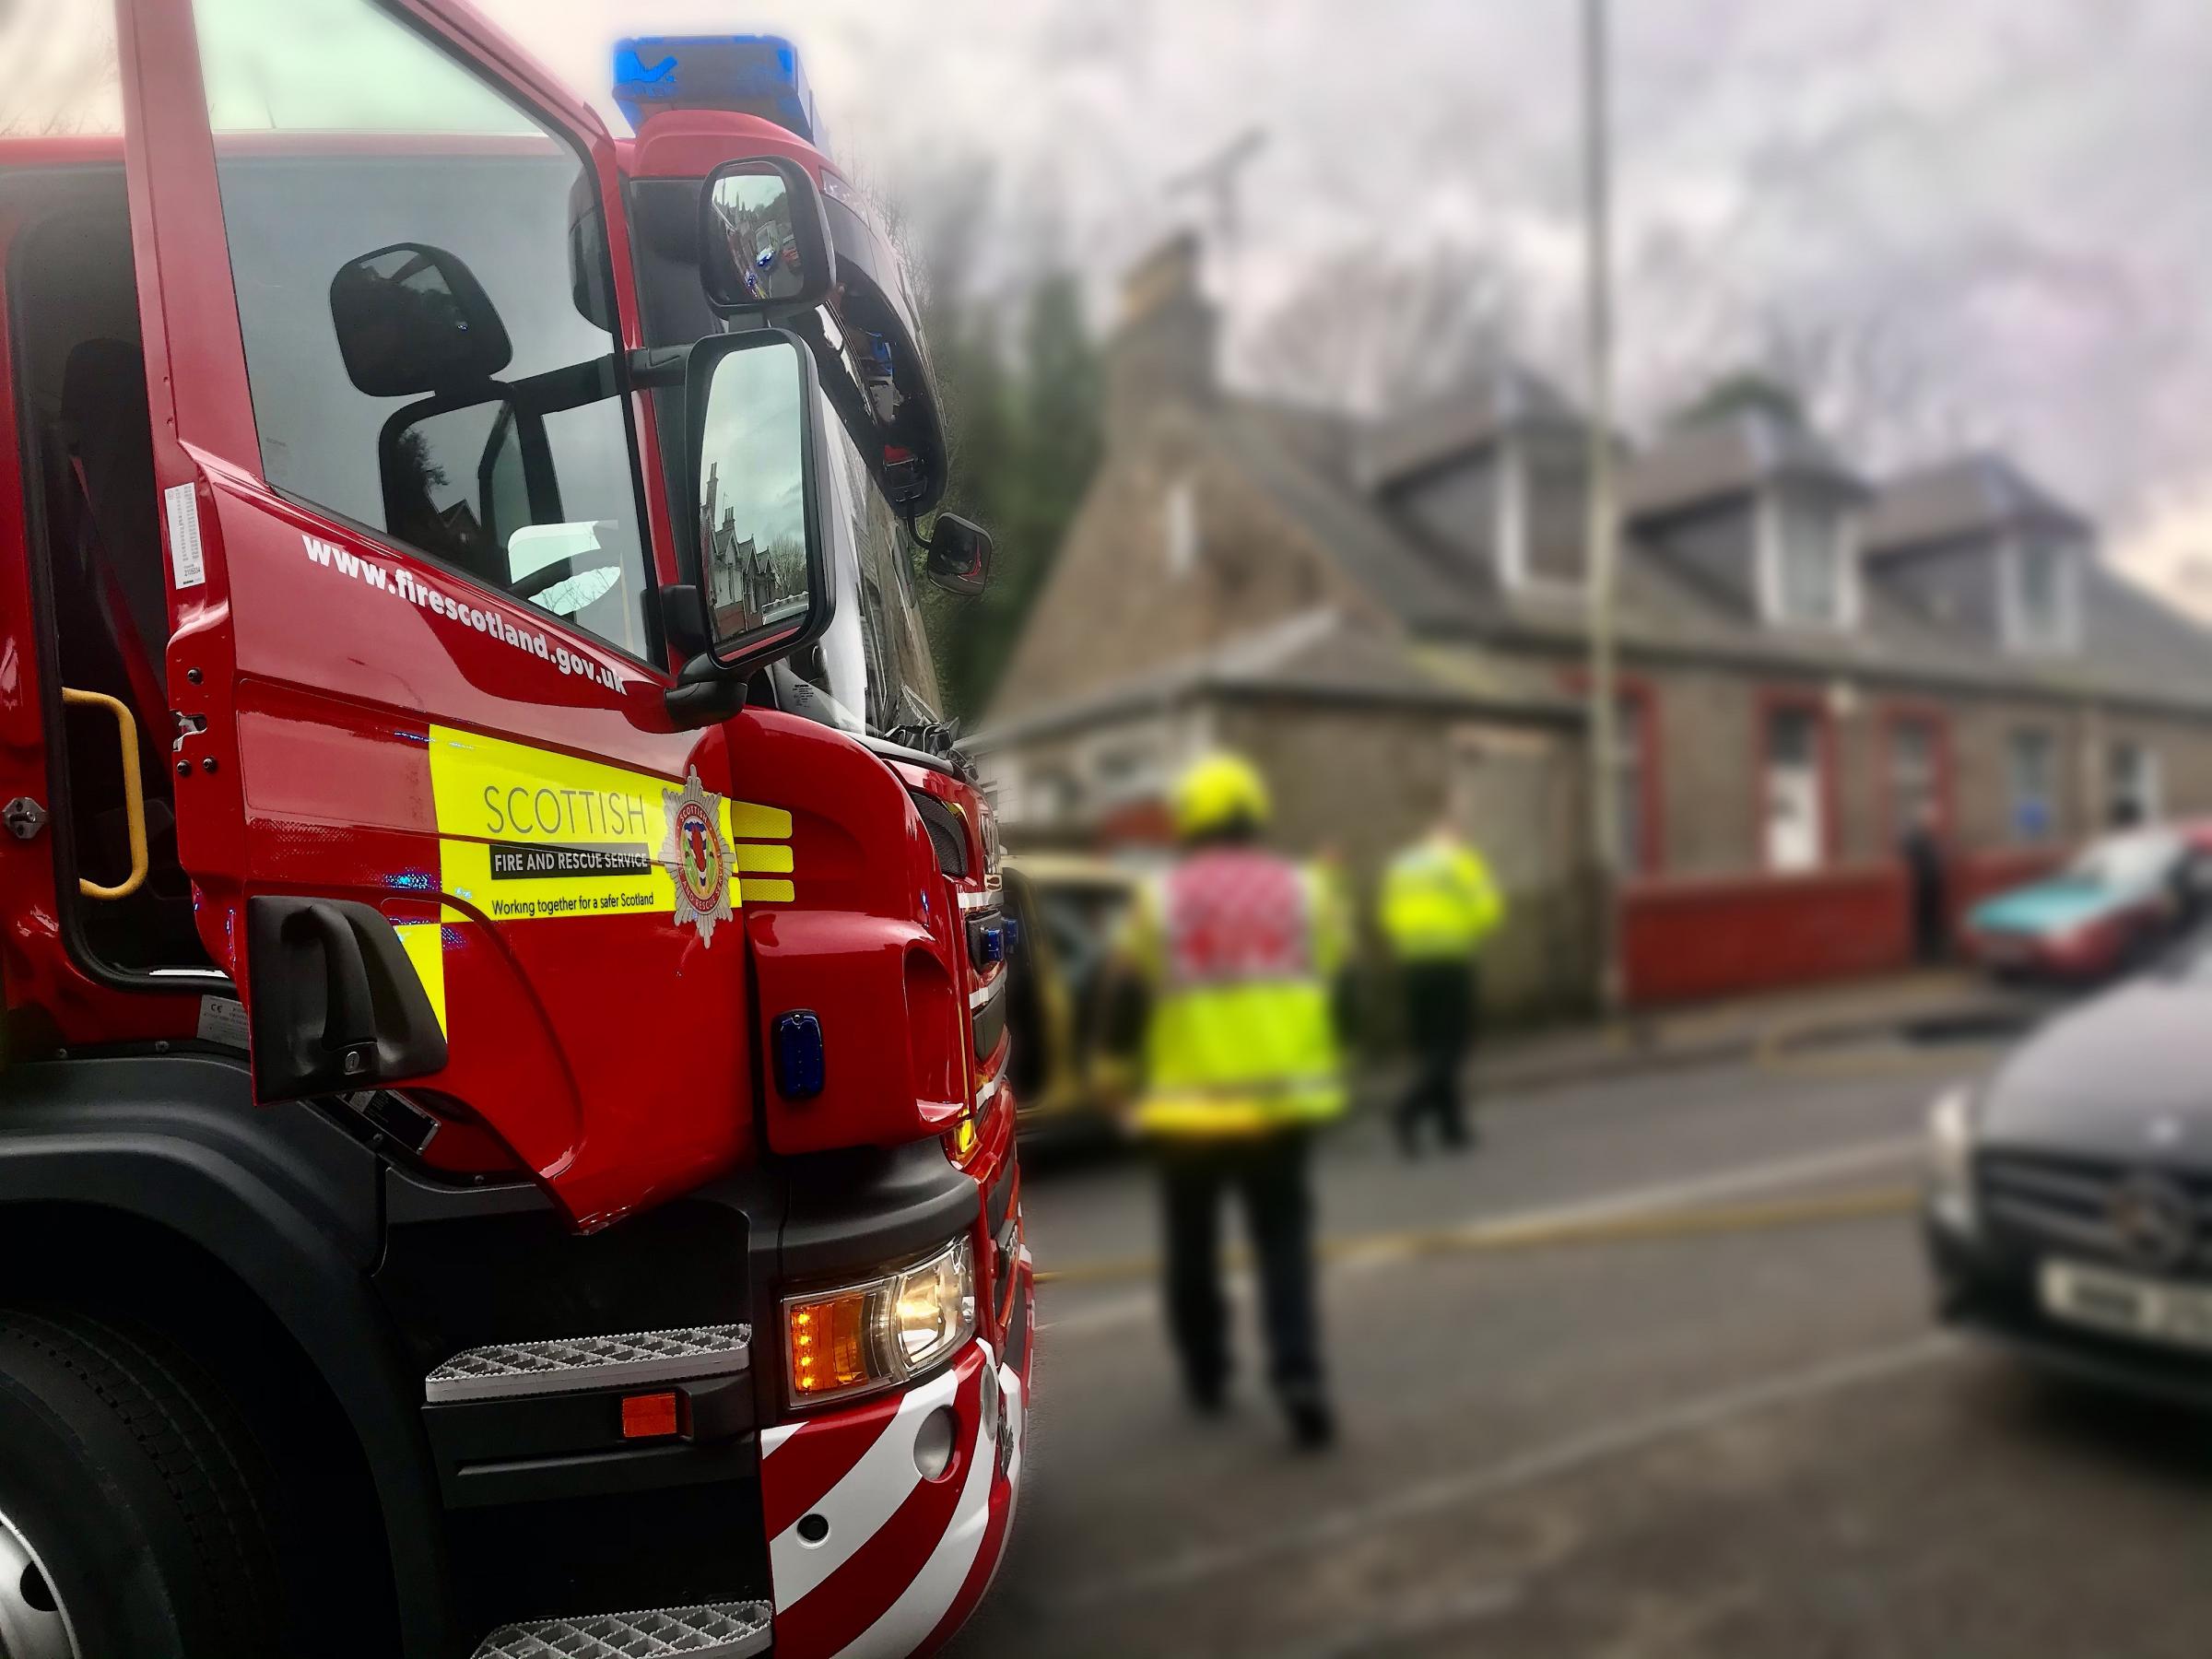 Five vans 'wilfully' set of fire in Wishaw, near Glasgow